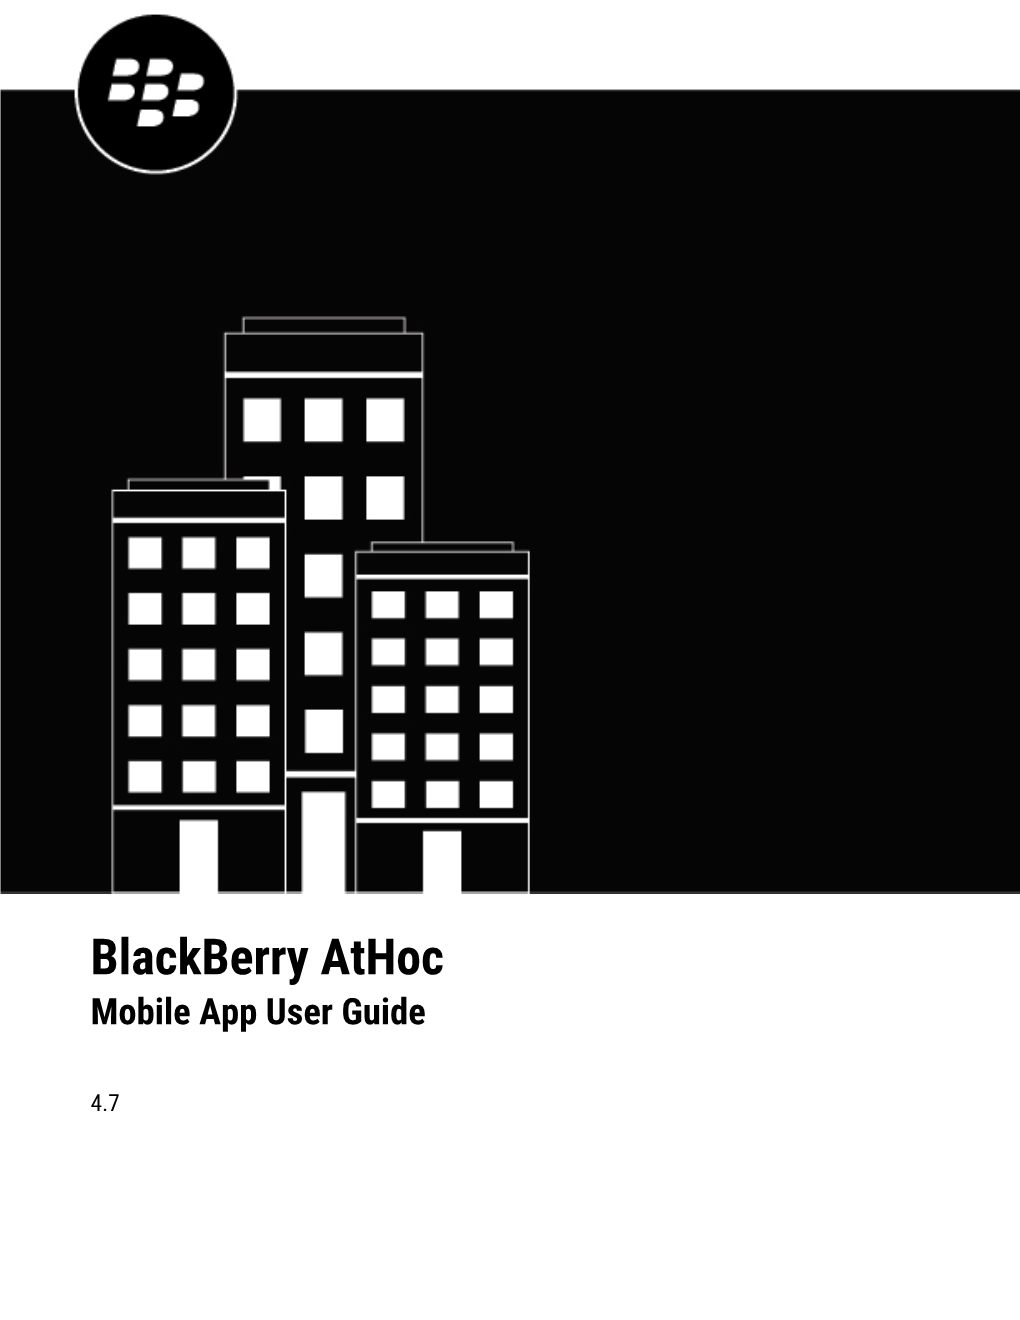 Blackberry Athoc Mobile App User Guide